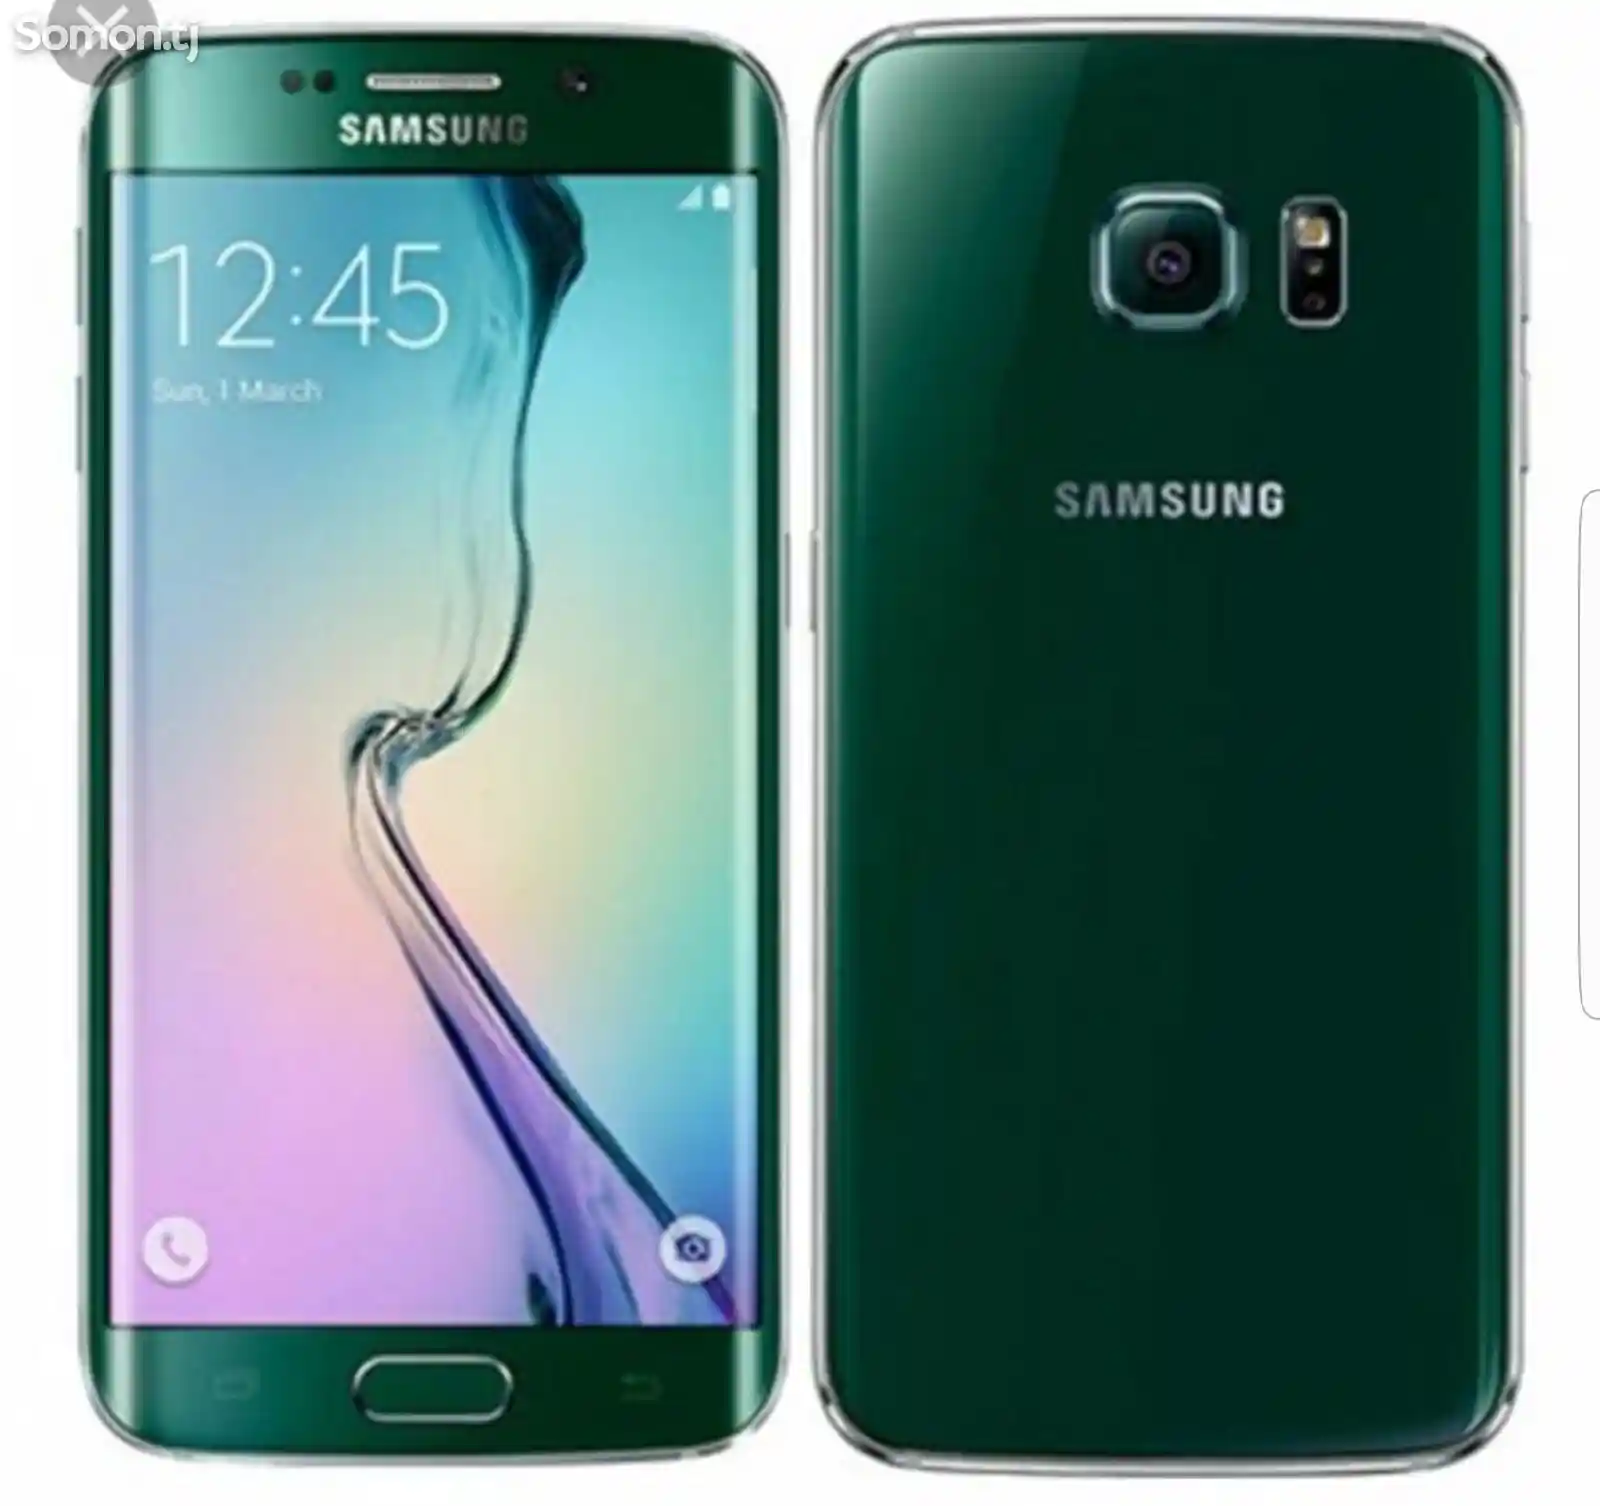 Samsung Galaxy S6 edge-2